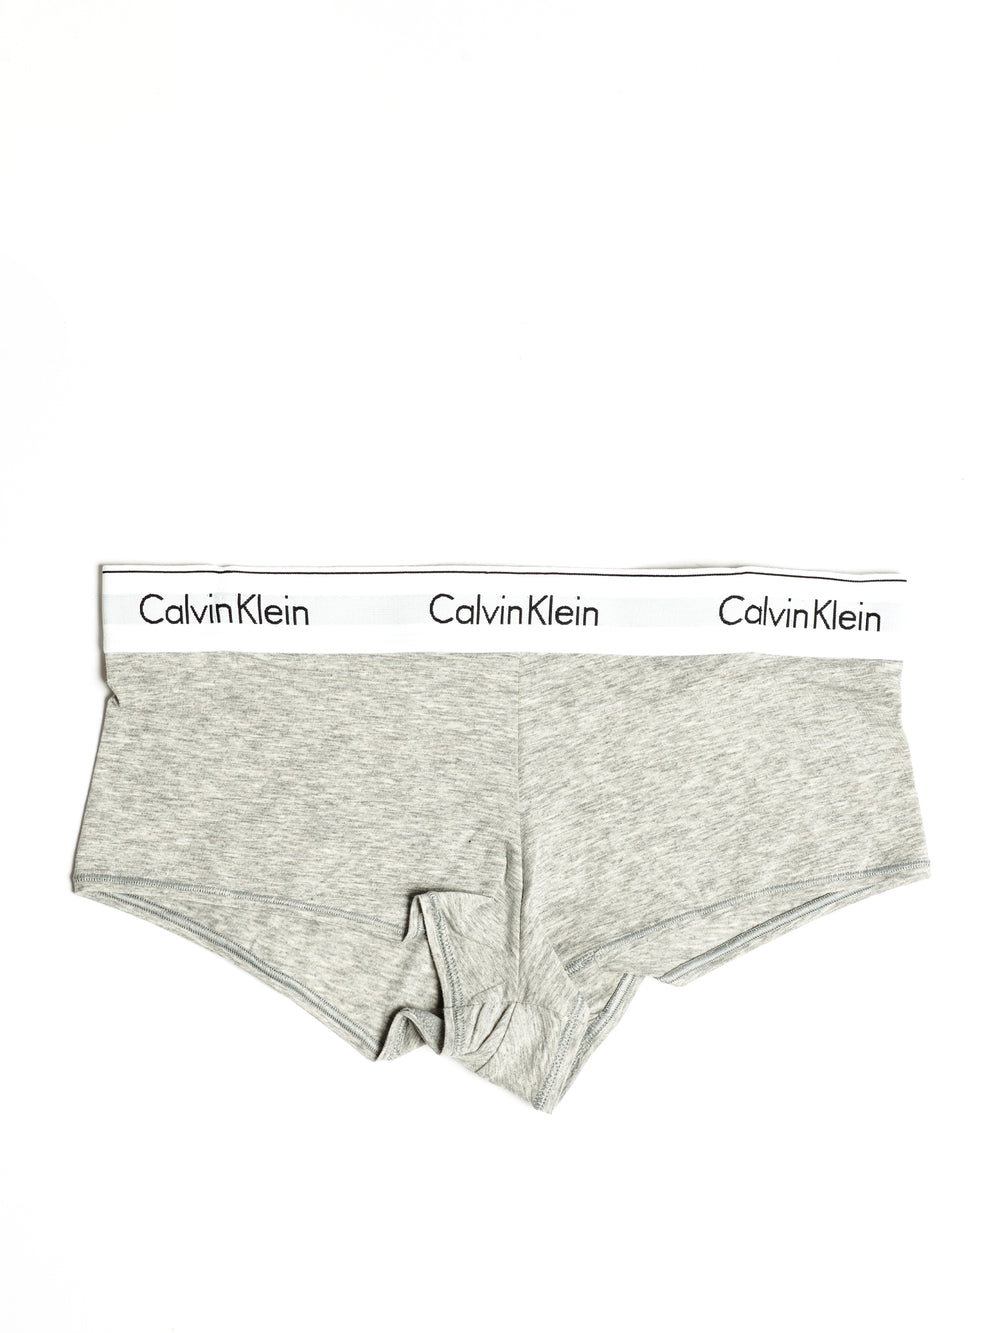 Calvin Klein Boyshort 100% Cotton Panties for Women for sale